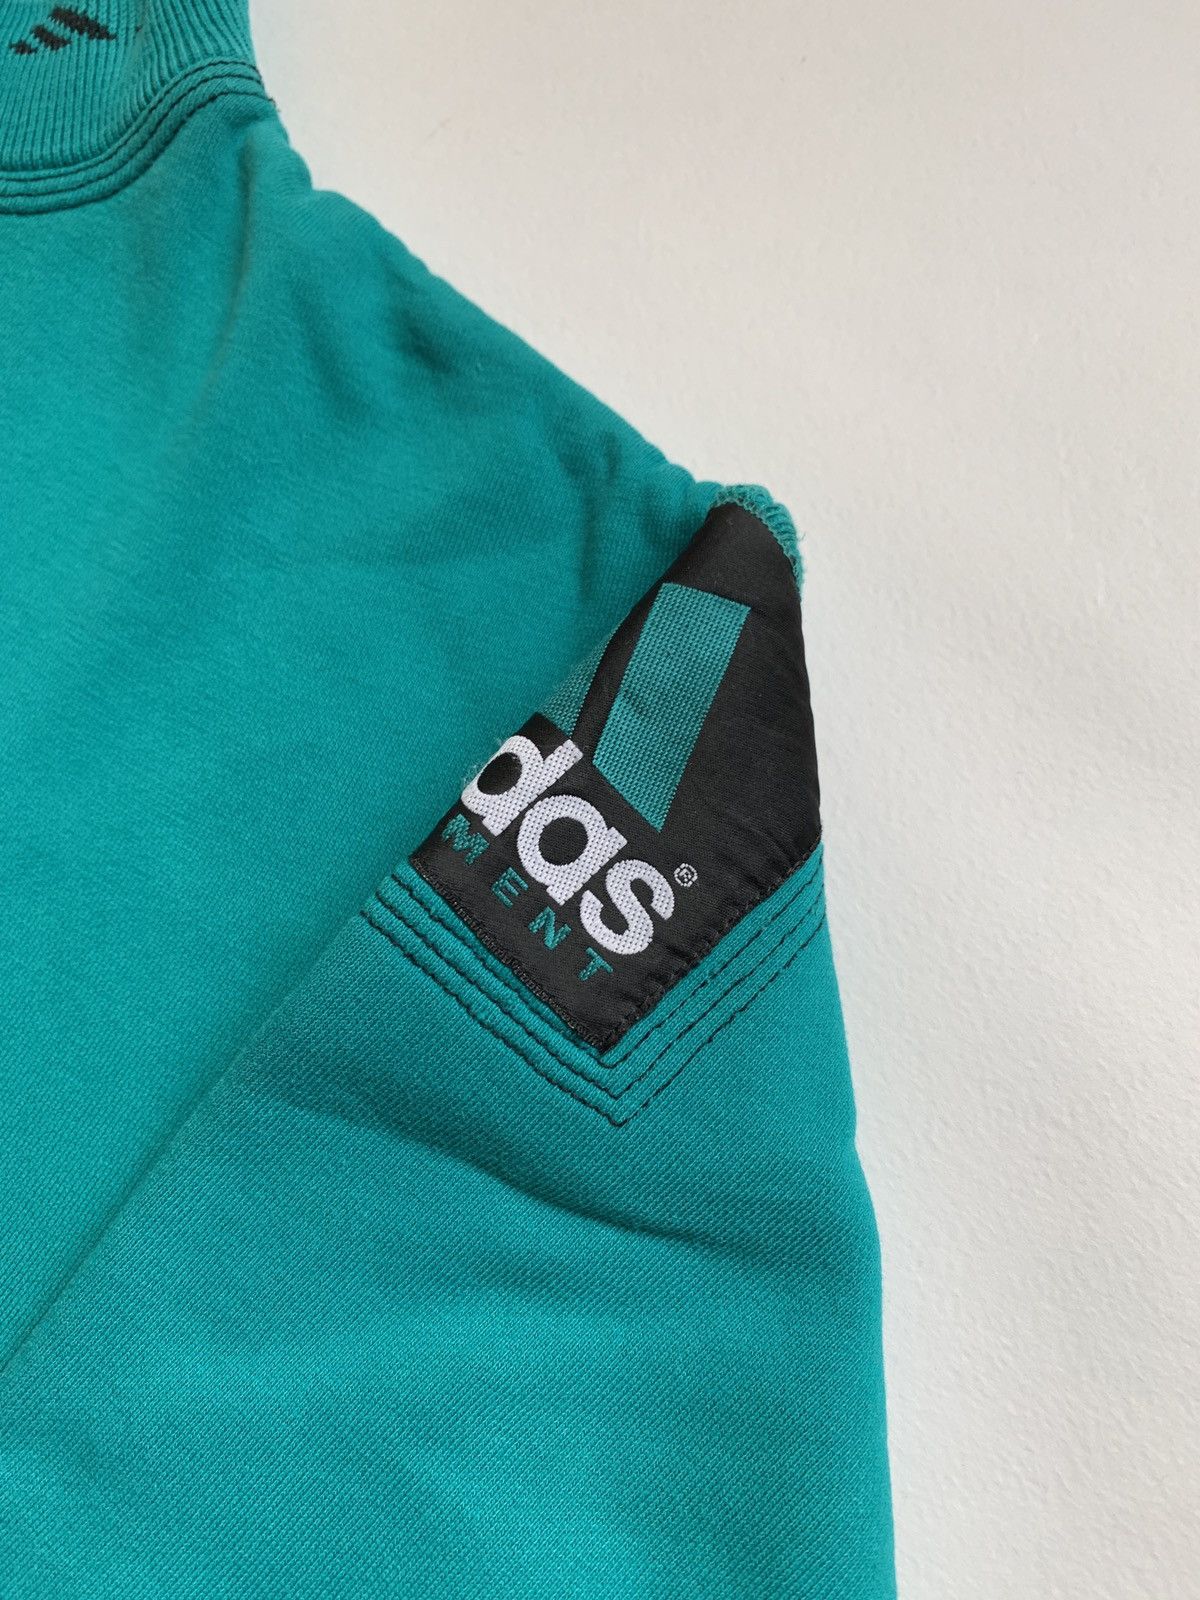 Adidas 90s Adidas Equipment Rare Vintage 1/3 Zip Sweatshirt Anorak Size US M / EU 48-50 / 2 - 4 Thumbnail